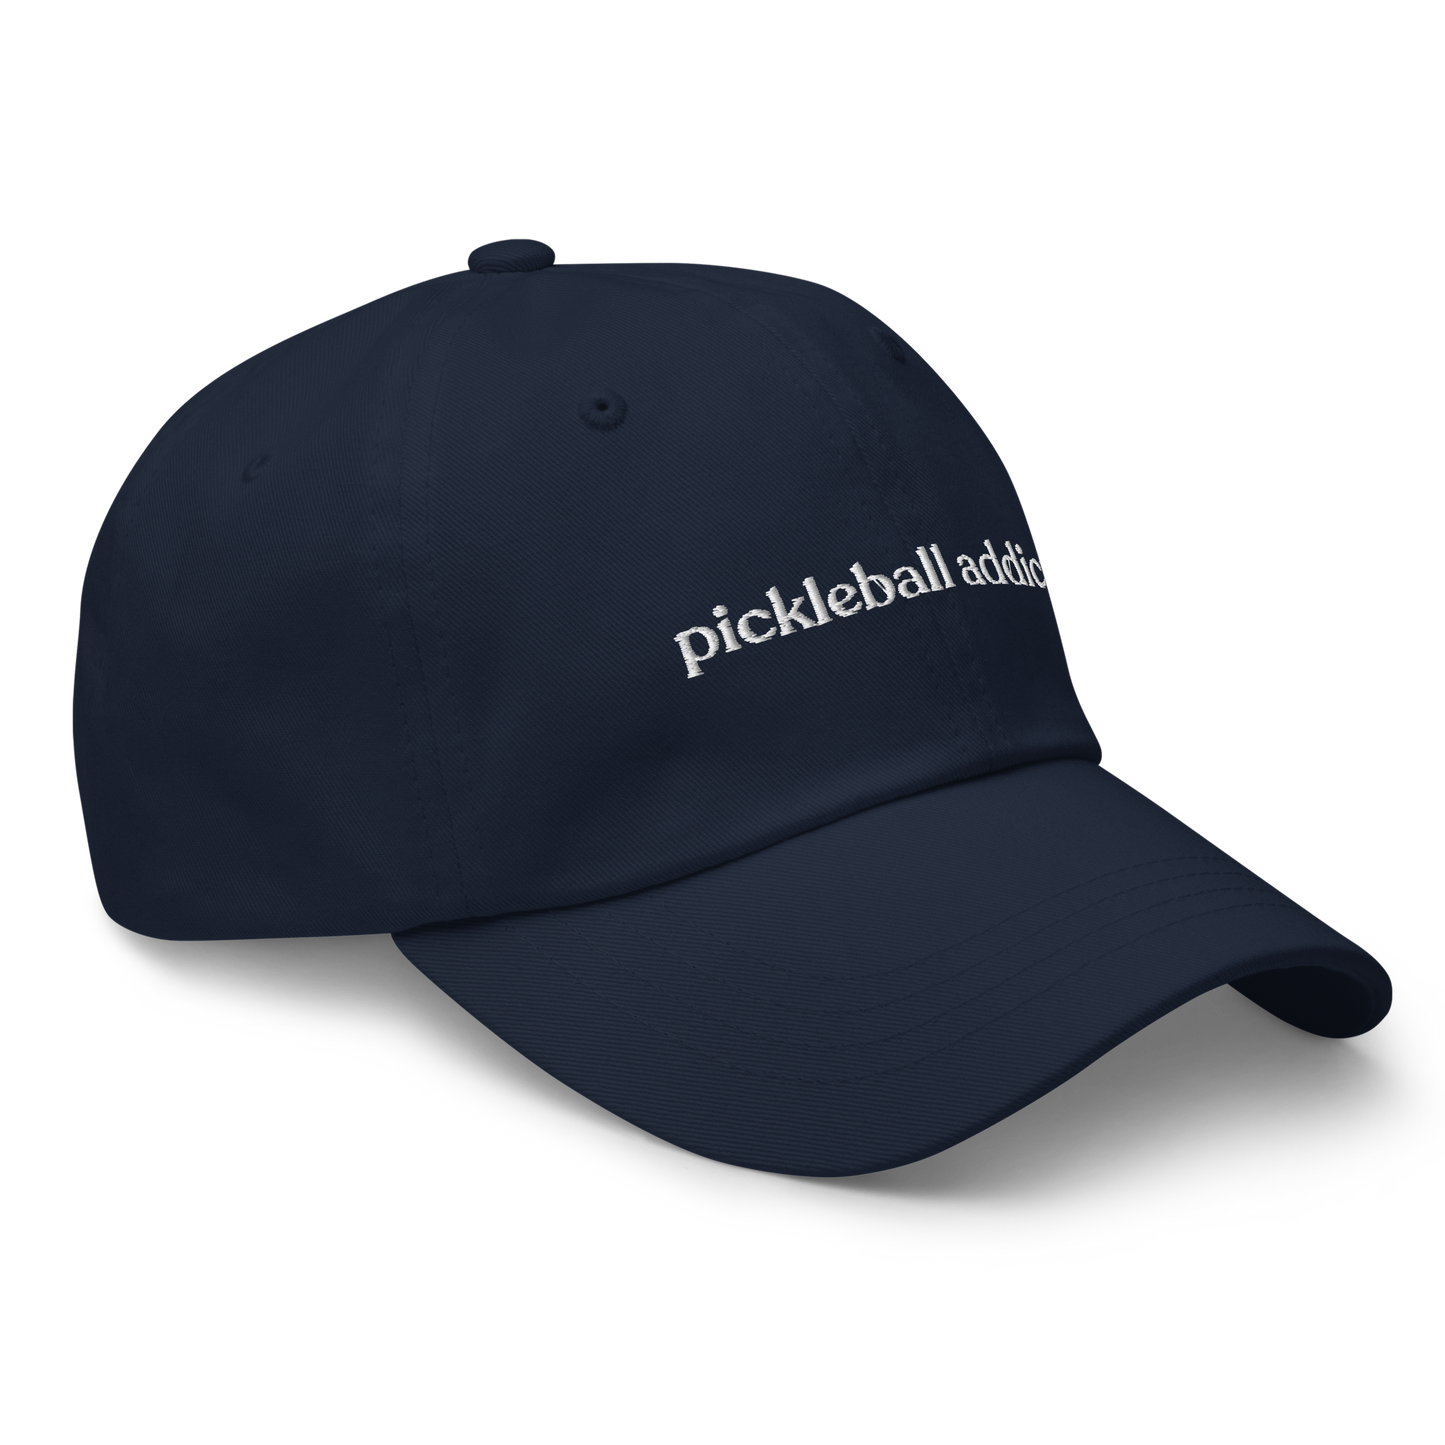 Pickleball Addict Baseball Cap